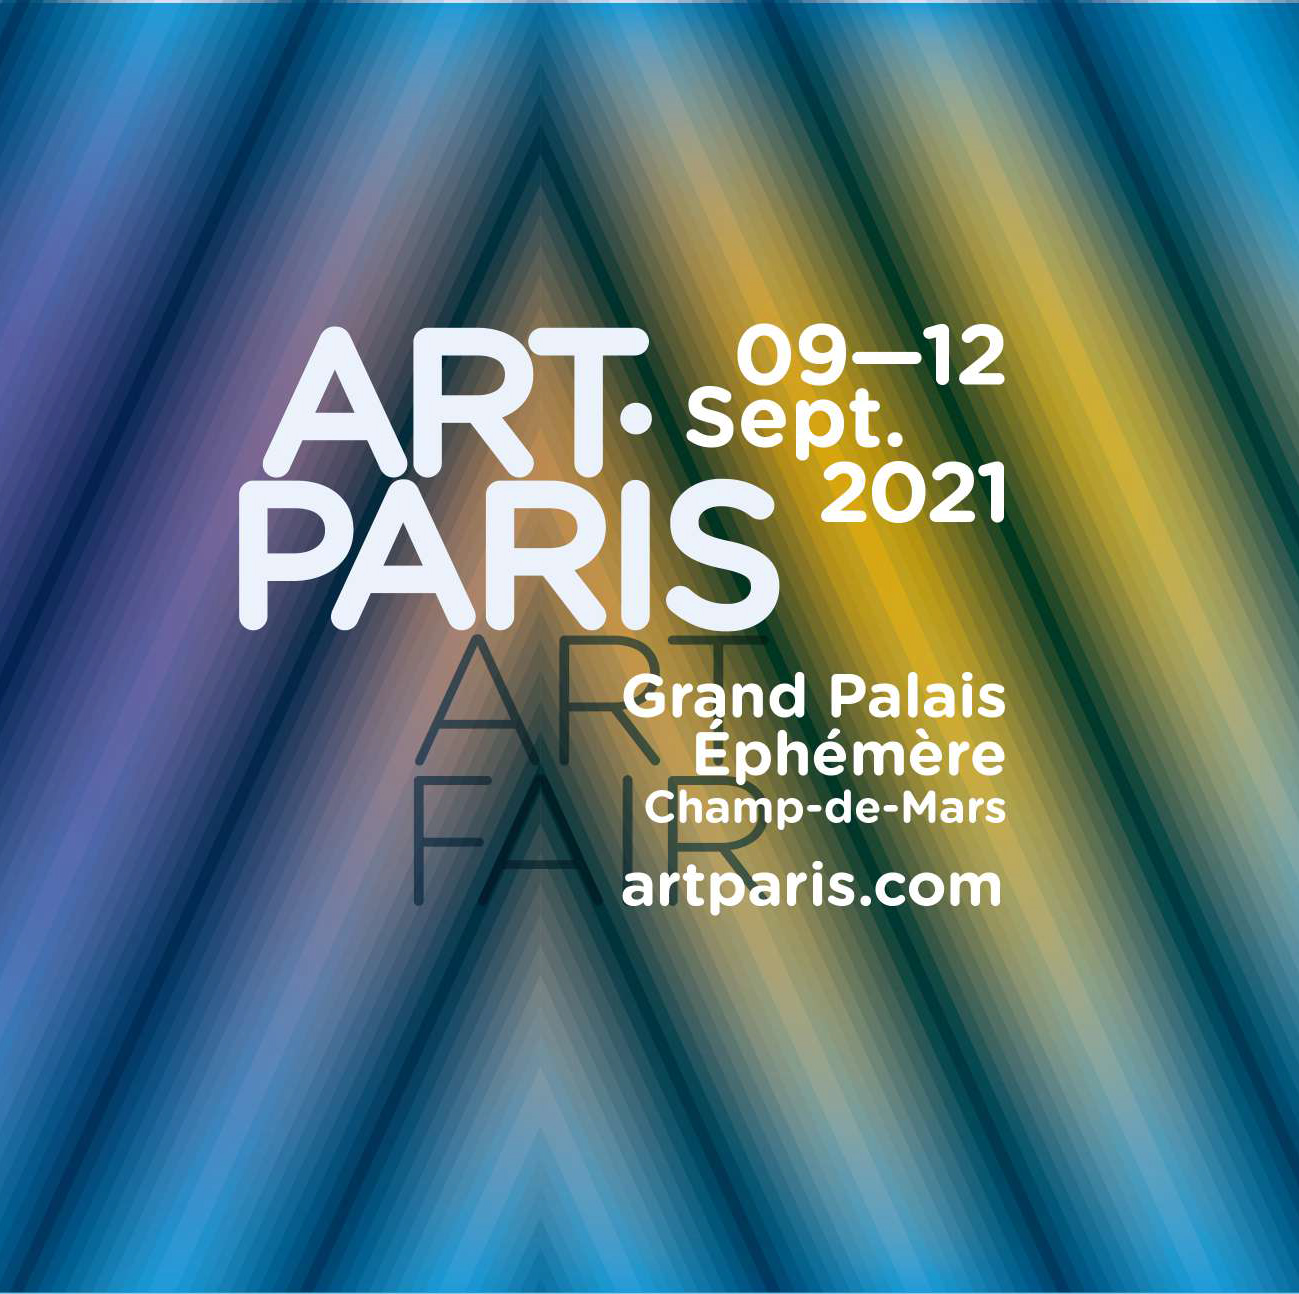 Art Paris Art Fair 2021